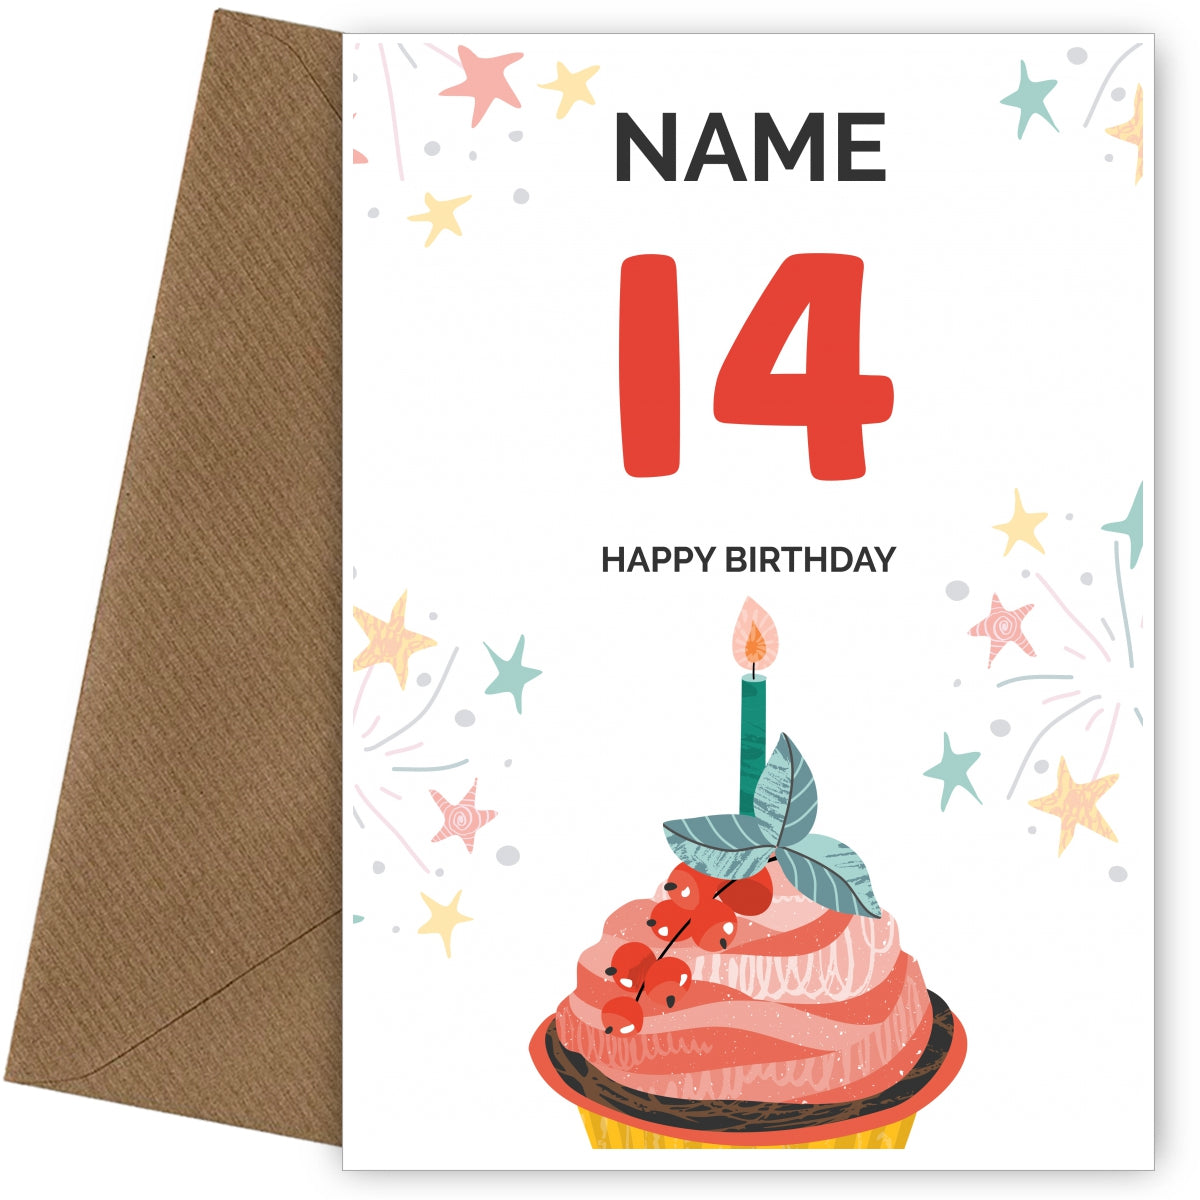 Happy 14th Birthday Card - Fun Cupcake Design